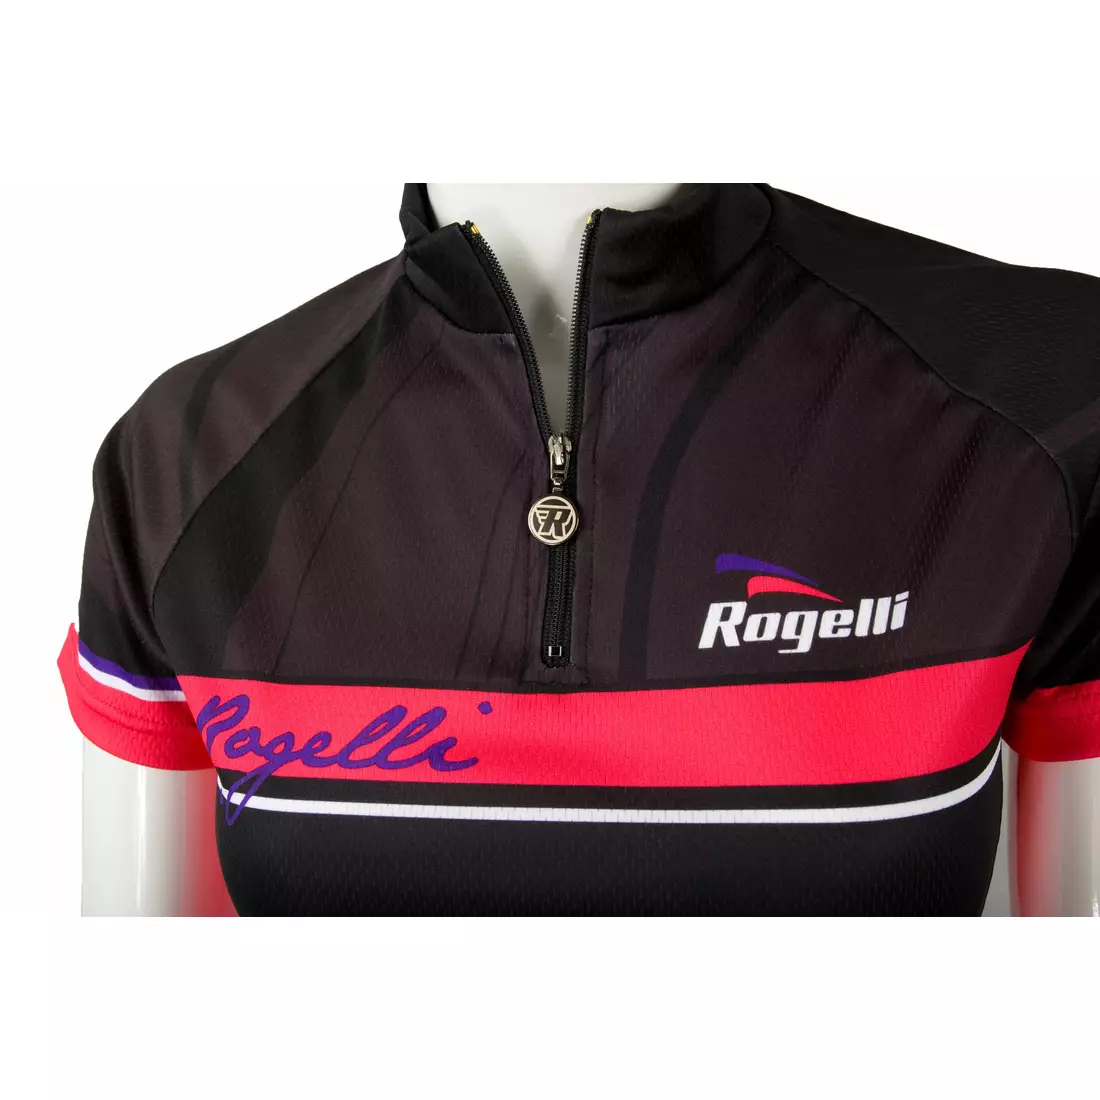 ROGELLI SIMONA women's cycling jersey, black and pink